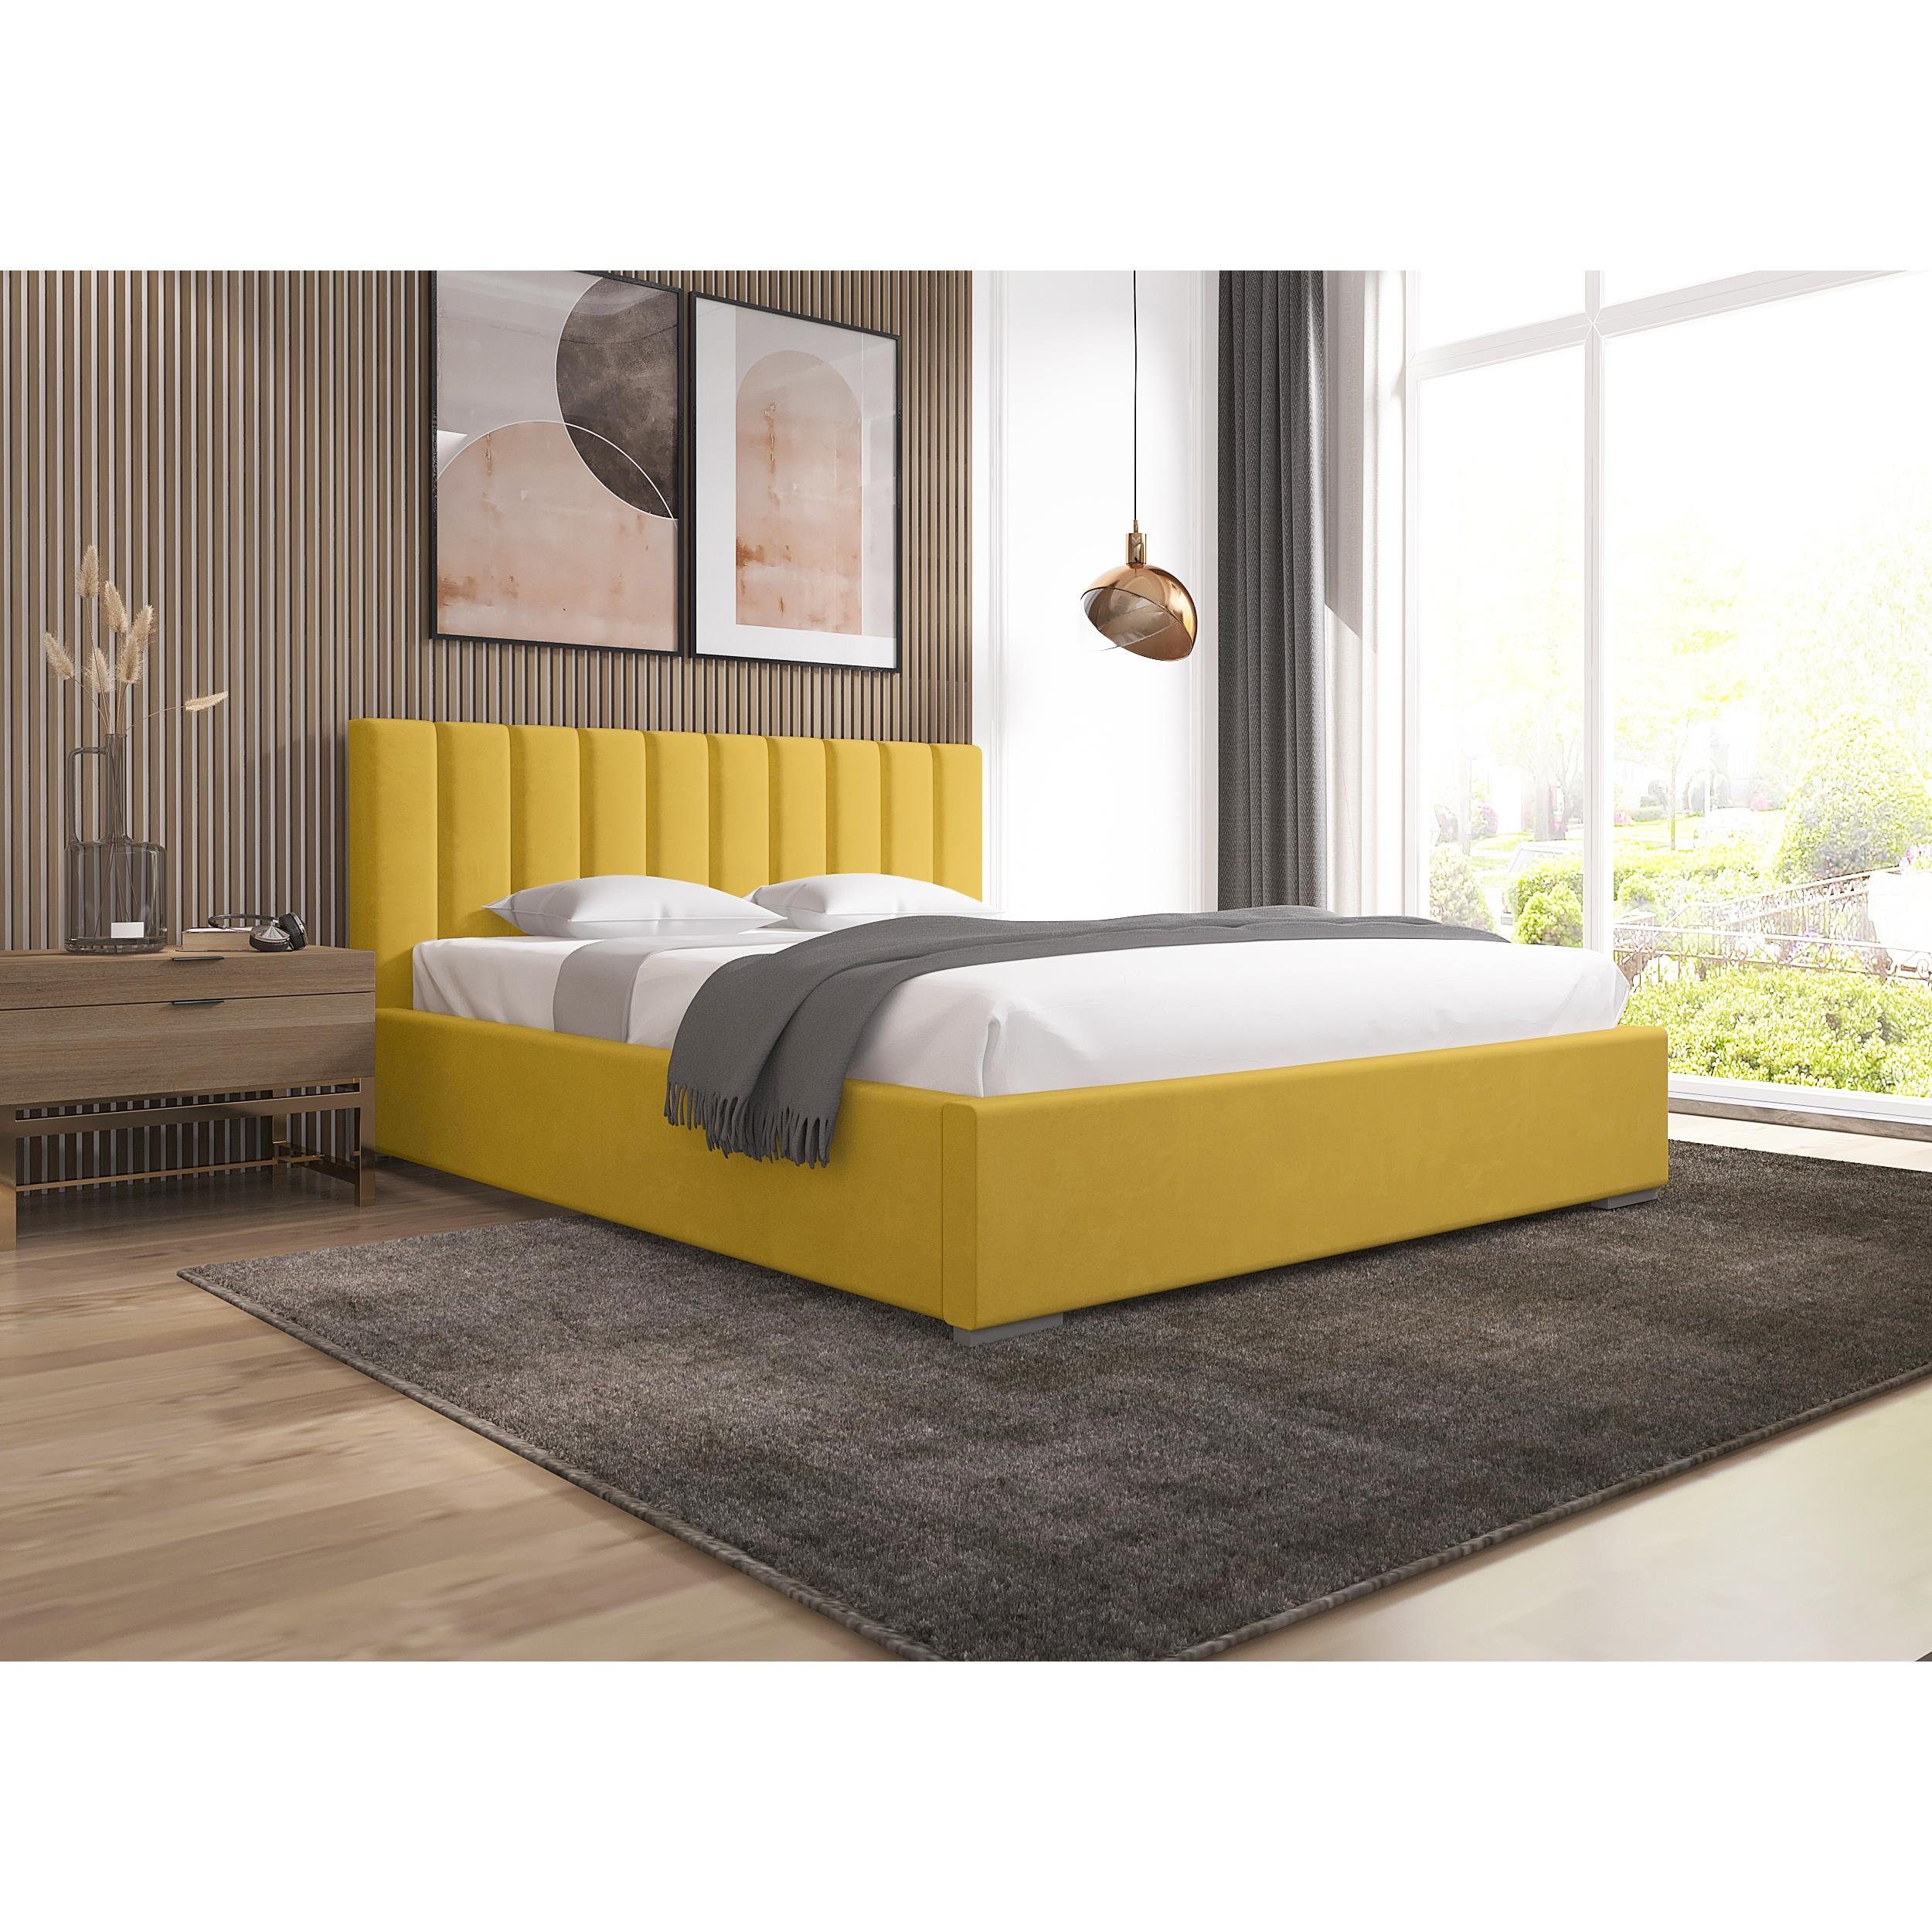 Beautysofa Polsterbett Adeline (stilvoll Bett mit Velvet-Bezug, Beige Polsterbett 120 x 200 cm), mit Bettkasten, mit Holzgestell Gelb (mono 236)